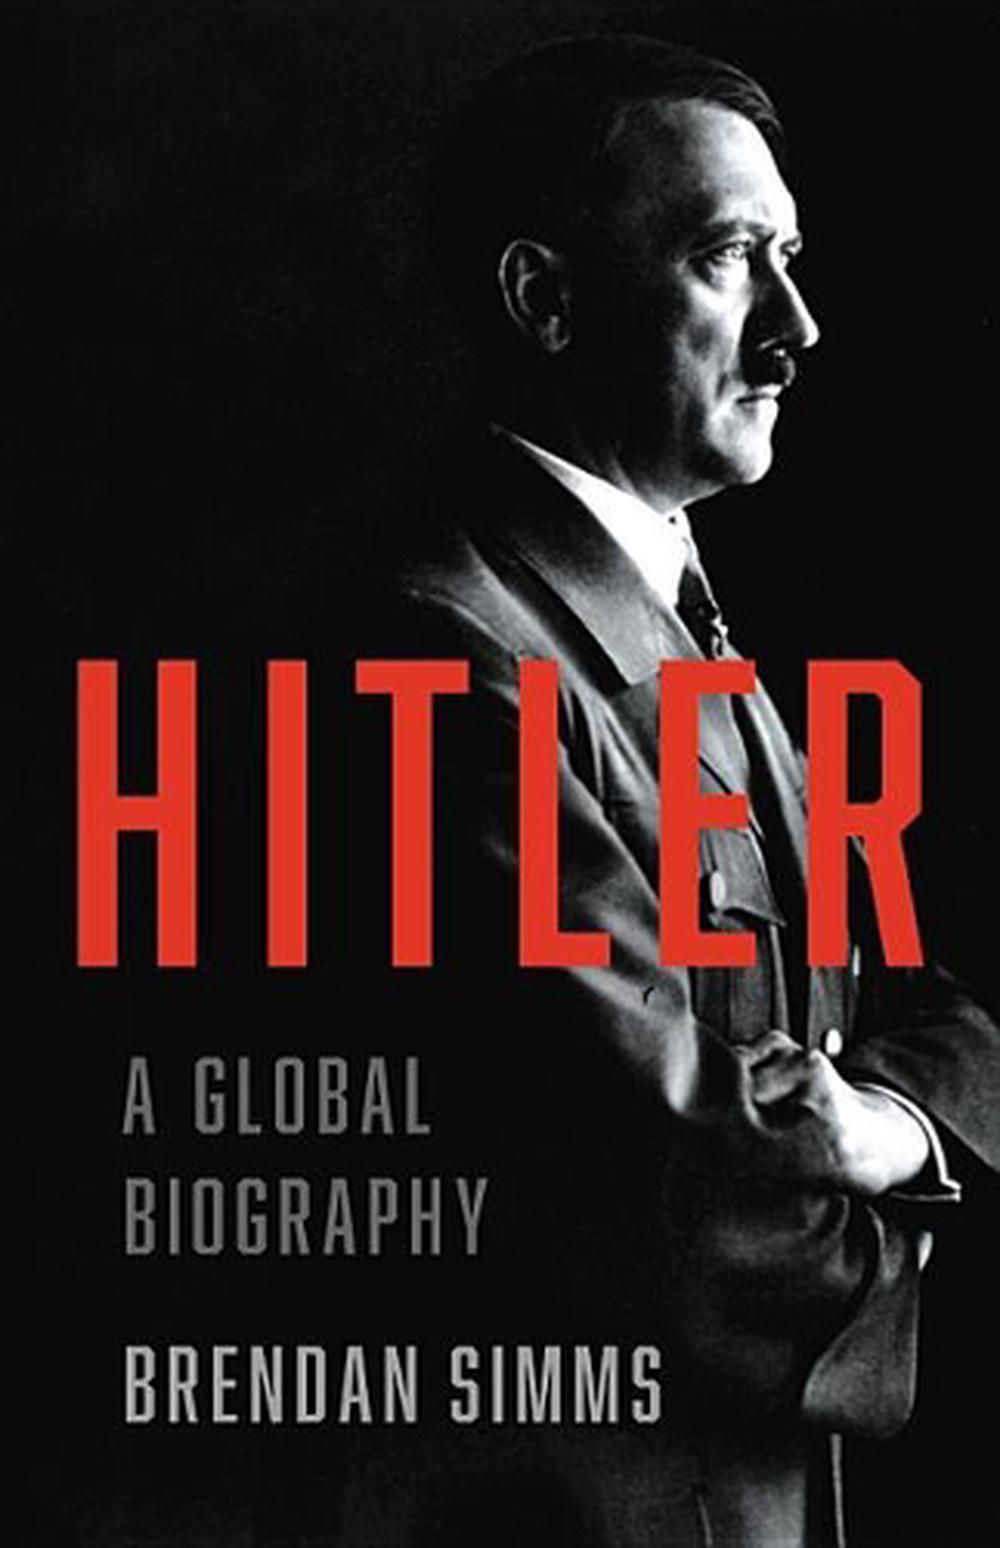 biography.com hitler